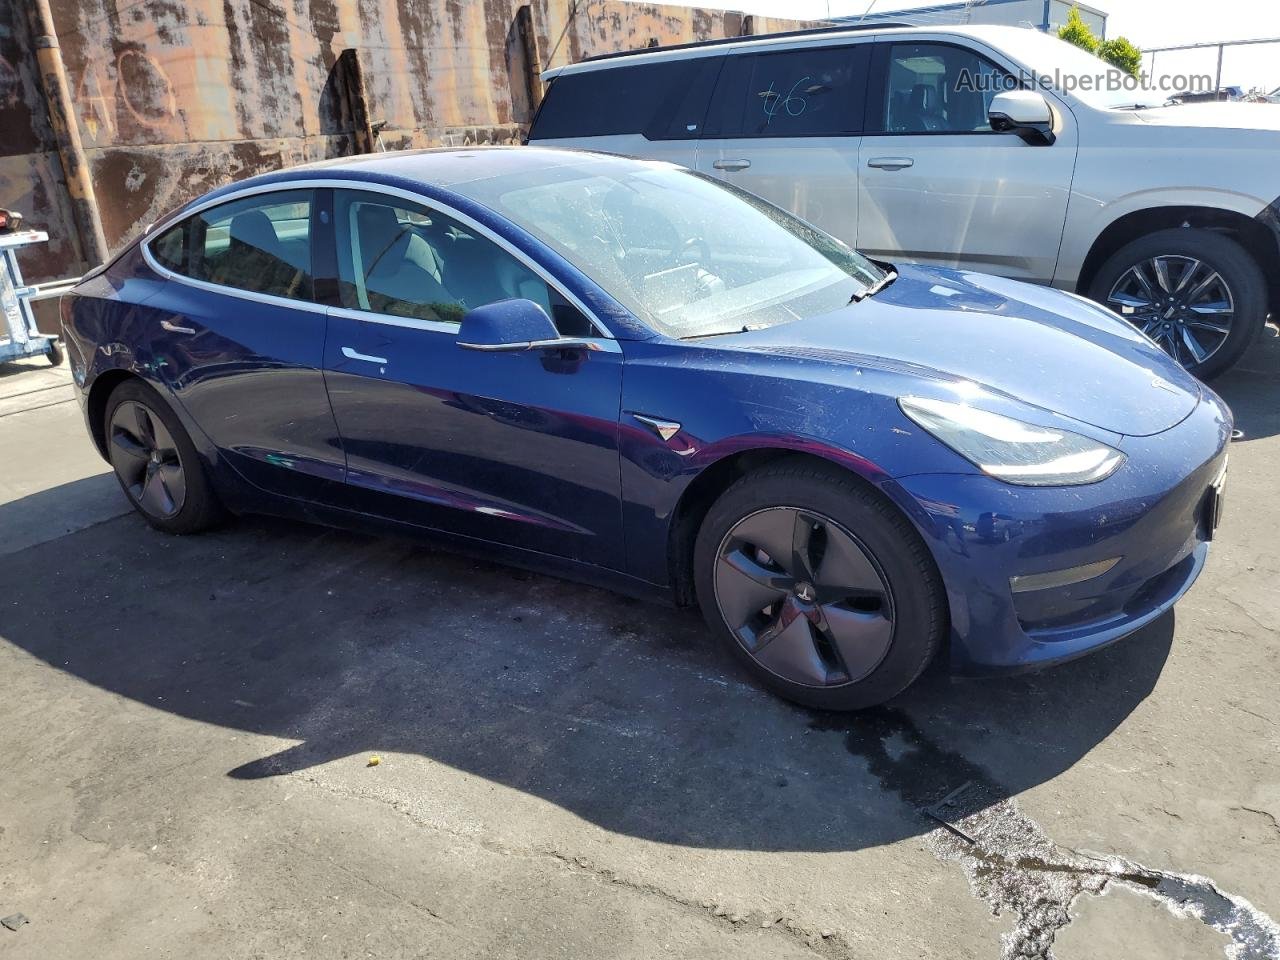 2018 Tesla Model 3  Blue vin: 5YJ3E1EA8JF102400